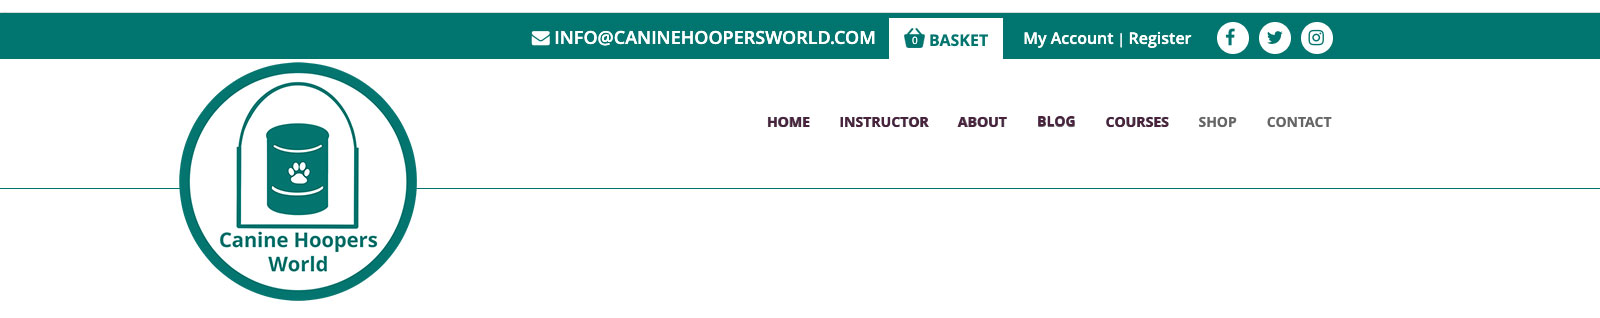 canine hoopers world website banner